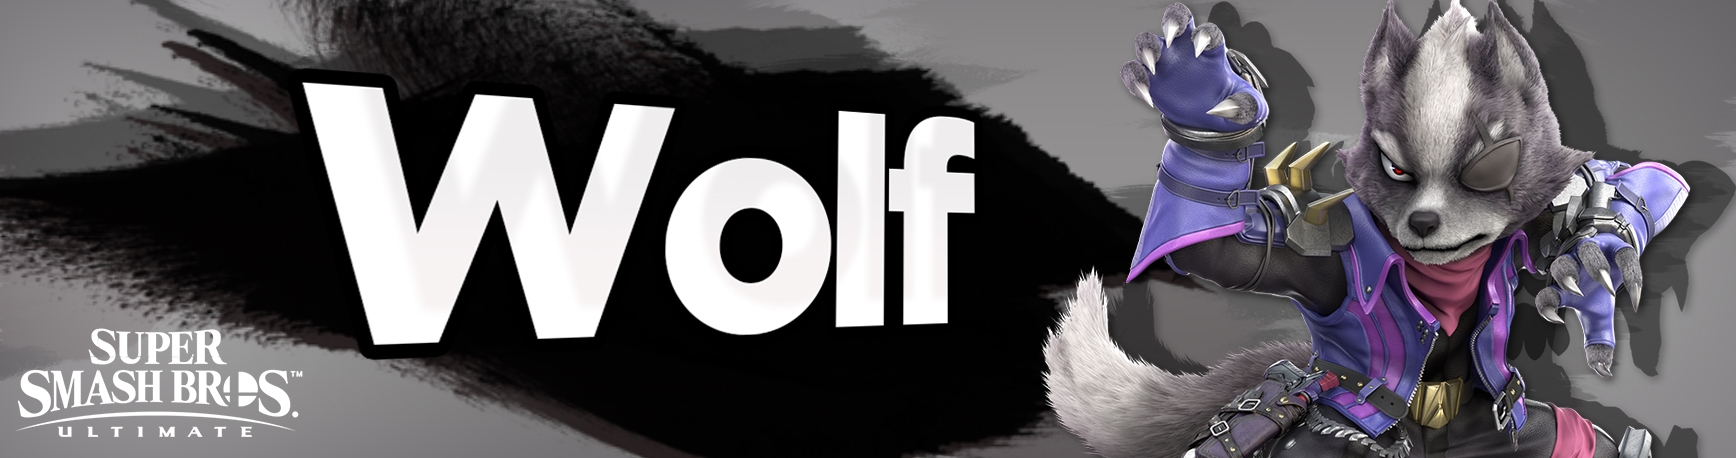 Banner Wolf Nr 63 - Super Smash Bros series